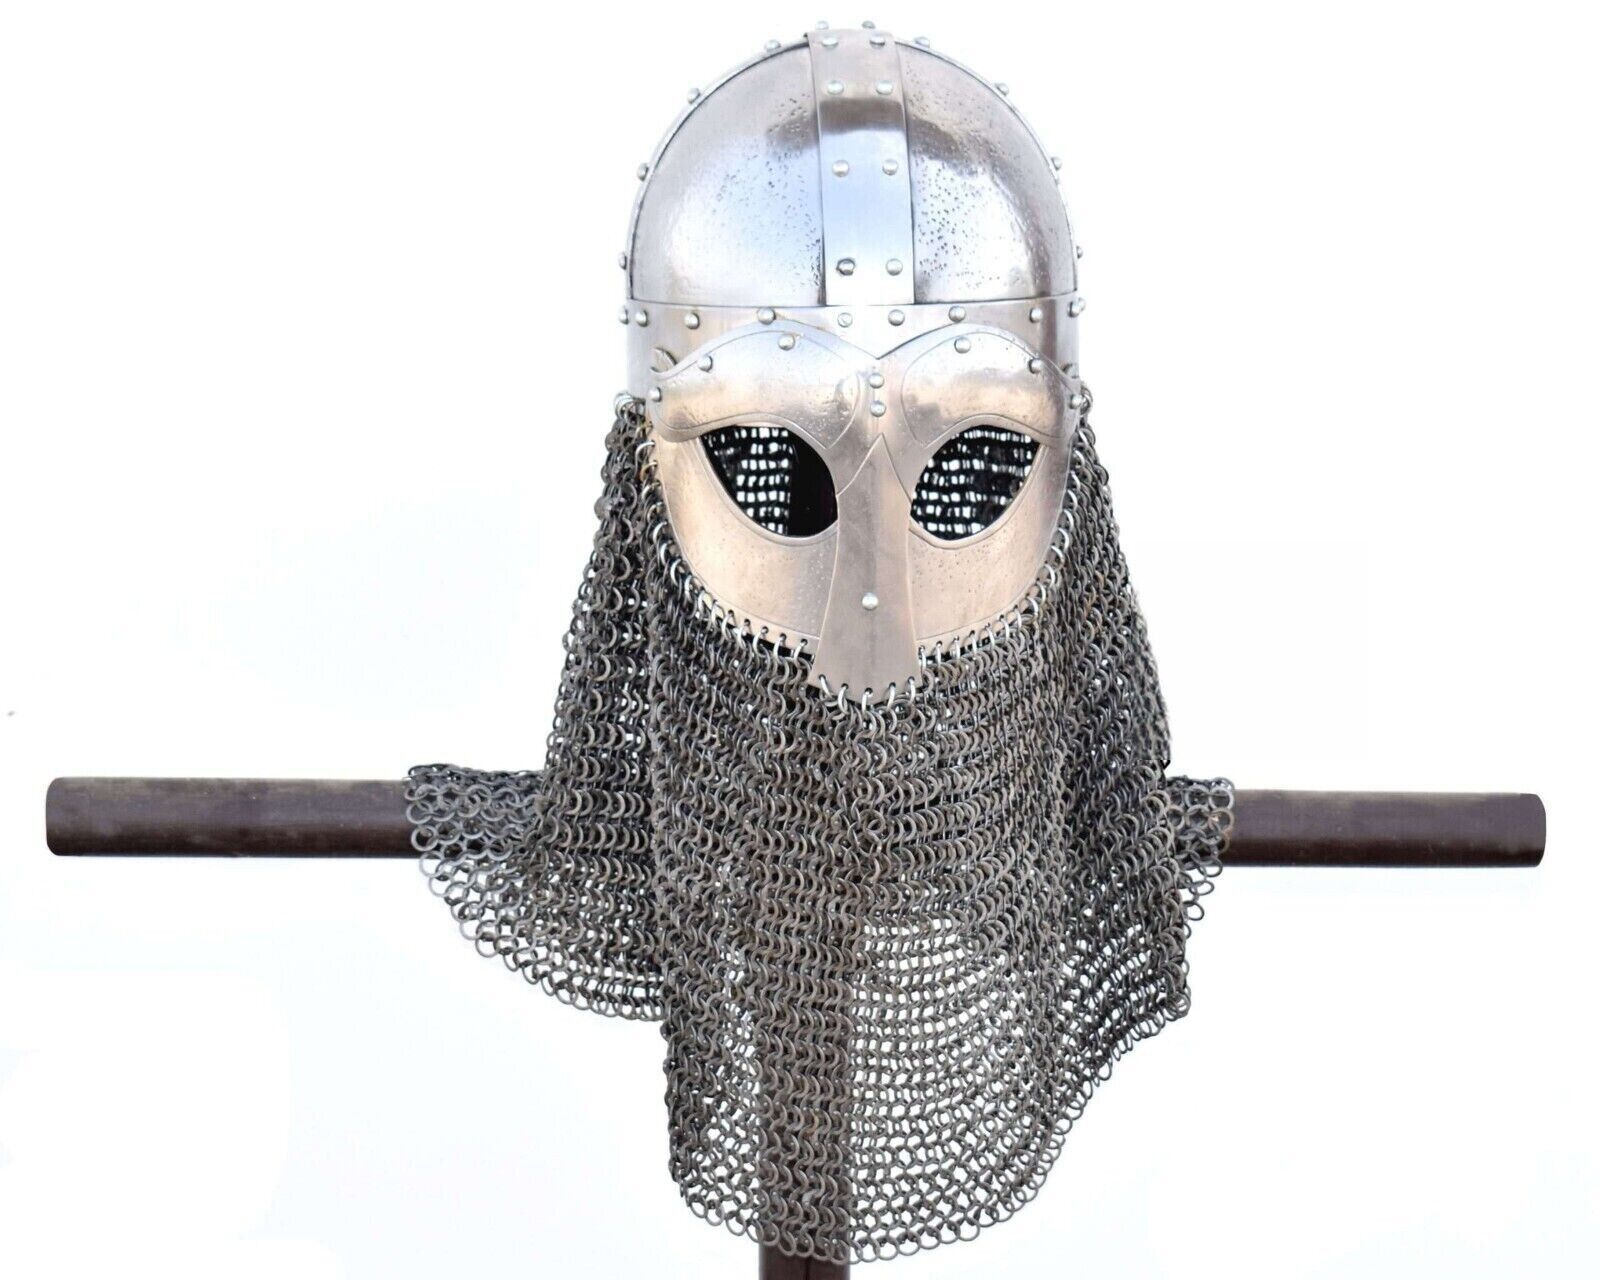 Handmade Antique Battle Ready Gjermundbu Helmet | Material : Mild Steel